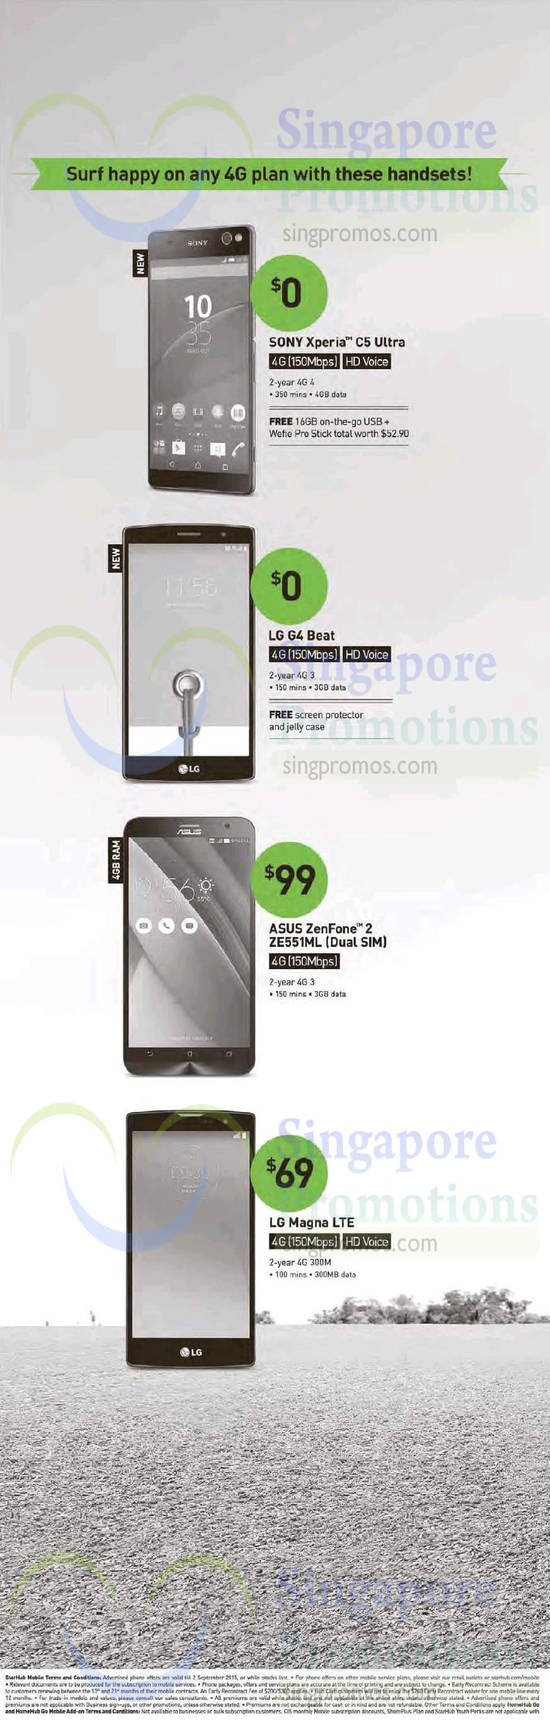 Sony Xperia C5 Ultra, Asus Zenfone 2 ZE551ML, LG G4 Beat, Magna